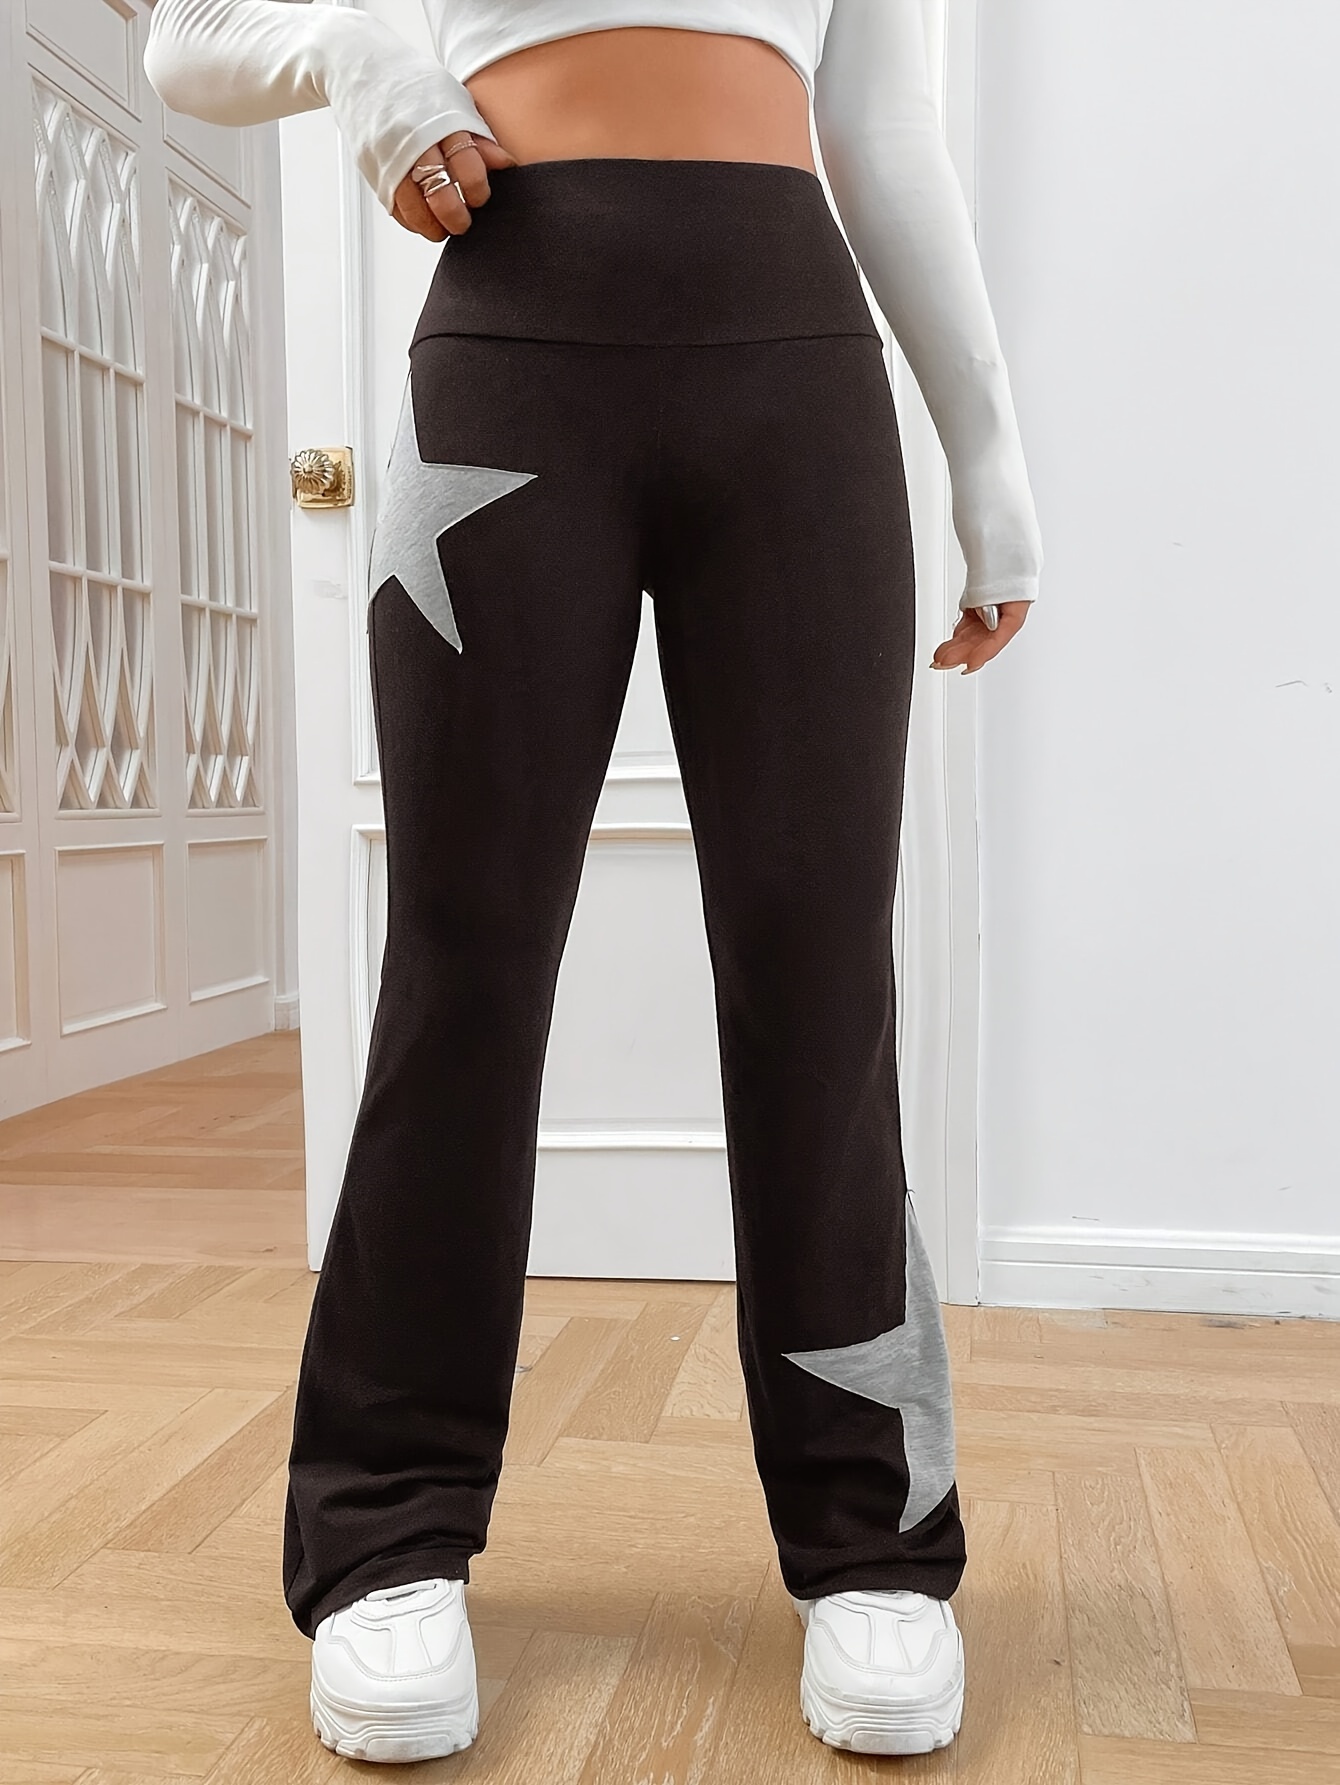 star pattern flare leg pants, star pattern flare leg pants casual high waist slim pants womens clothing details 0